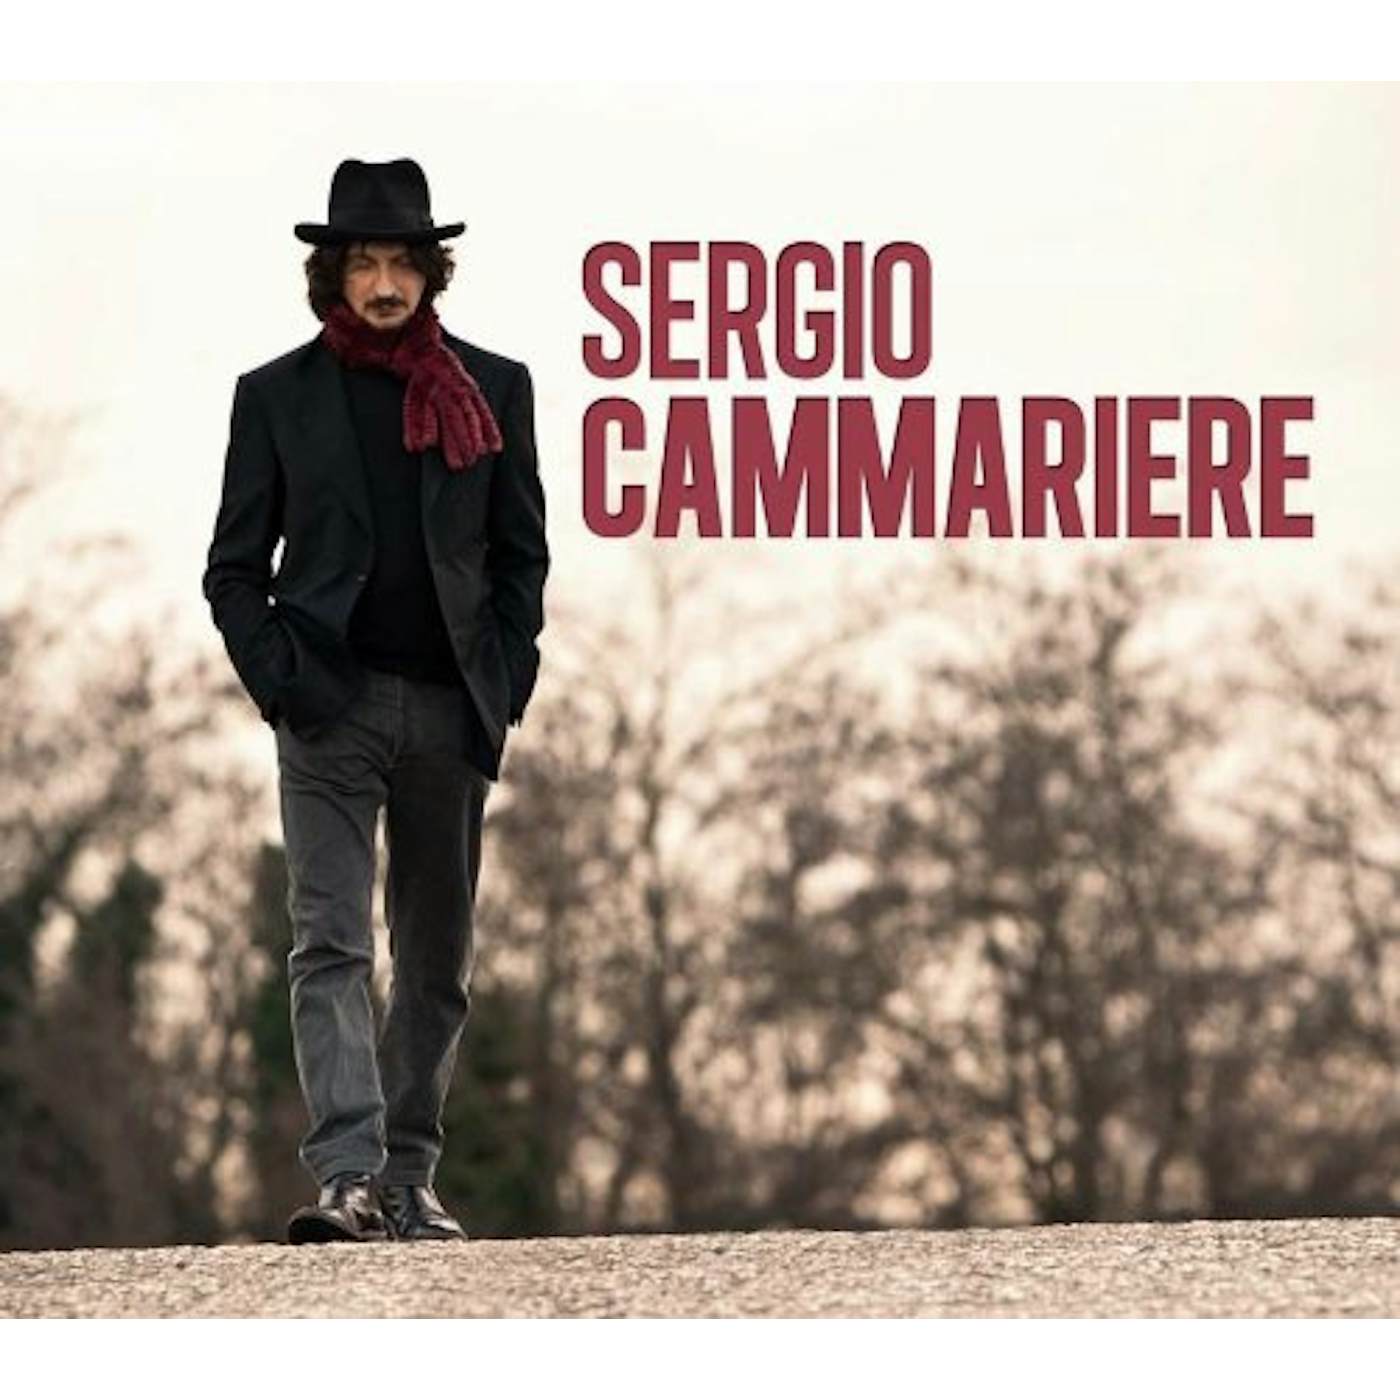 SERGIO CAMMARIERE Vinyl Record